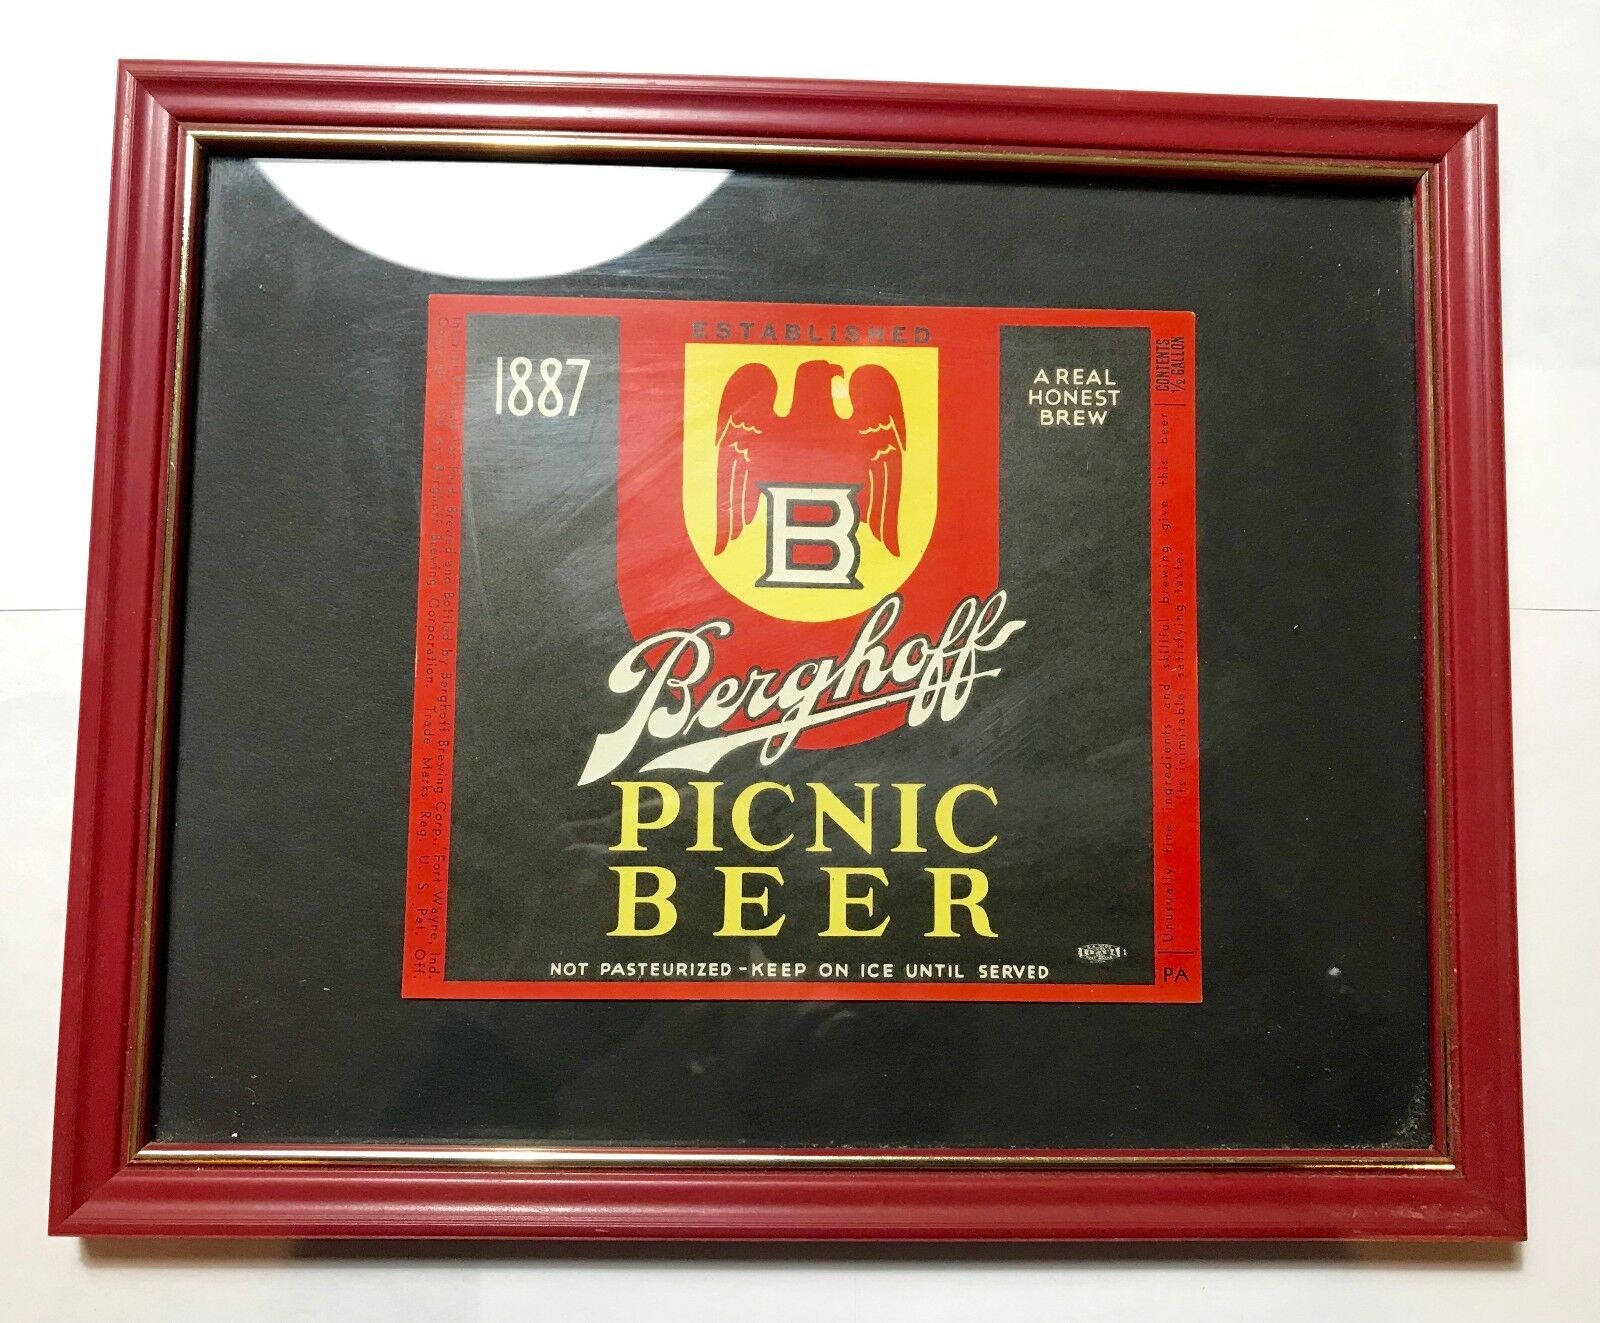 Vintage 1935 Berghoff Picnic Beer 1/2 Gallon IRTP Label - Framed - Nice Brewery